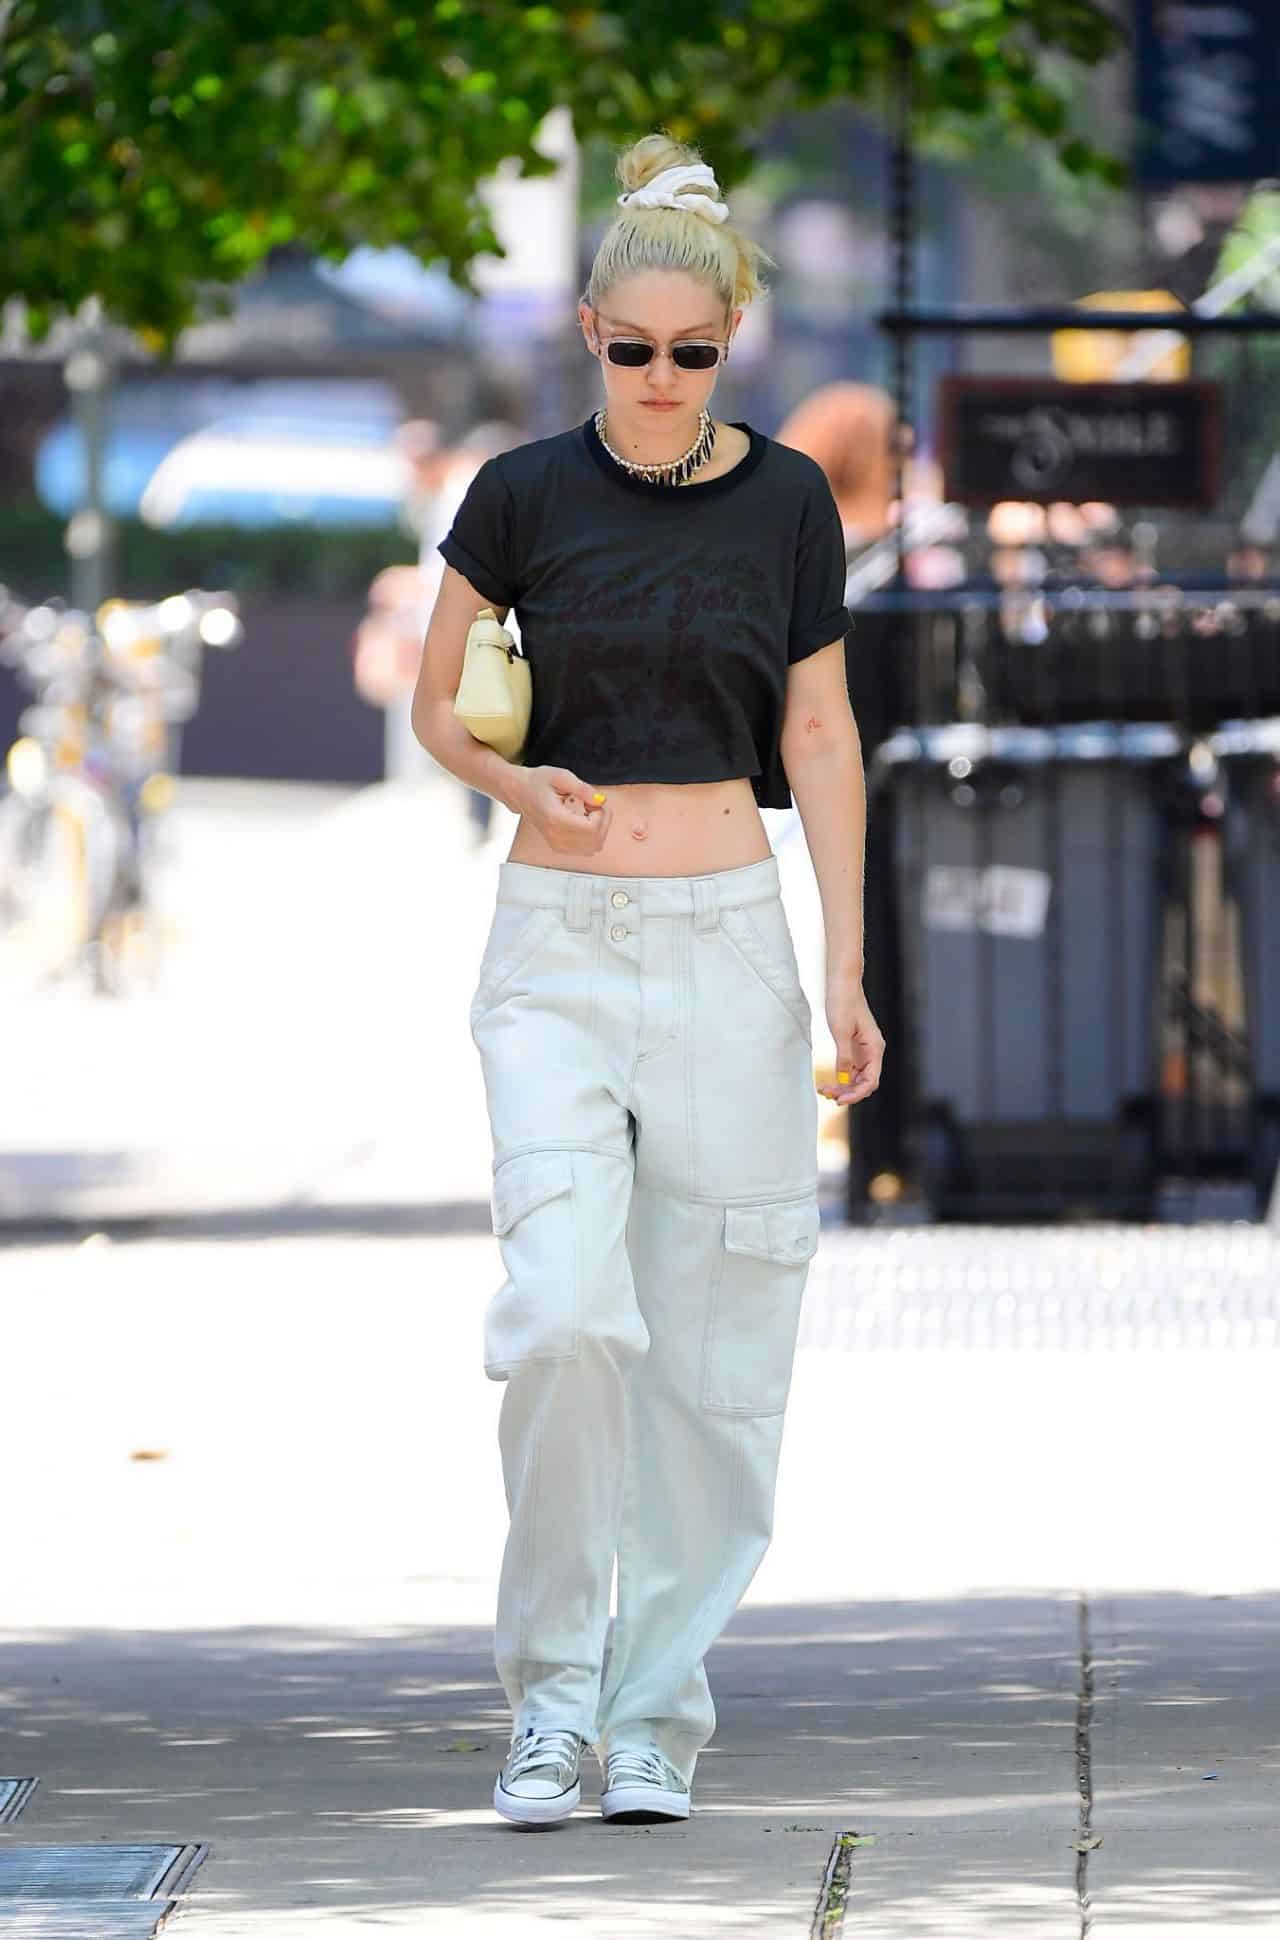 Gigi Hadid Walks Through New York in a Black Crop Top and Cargo White Pants